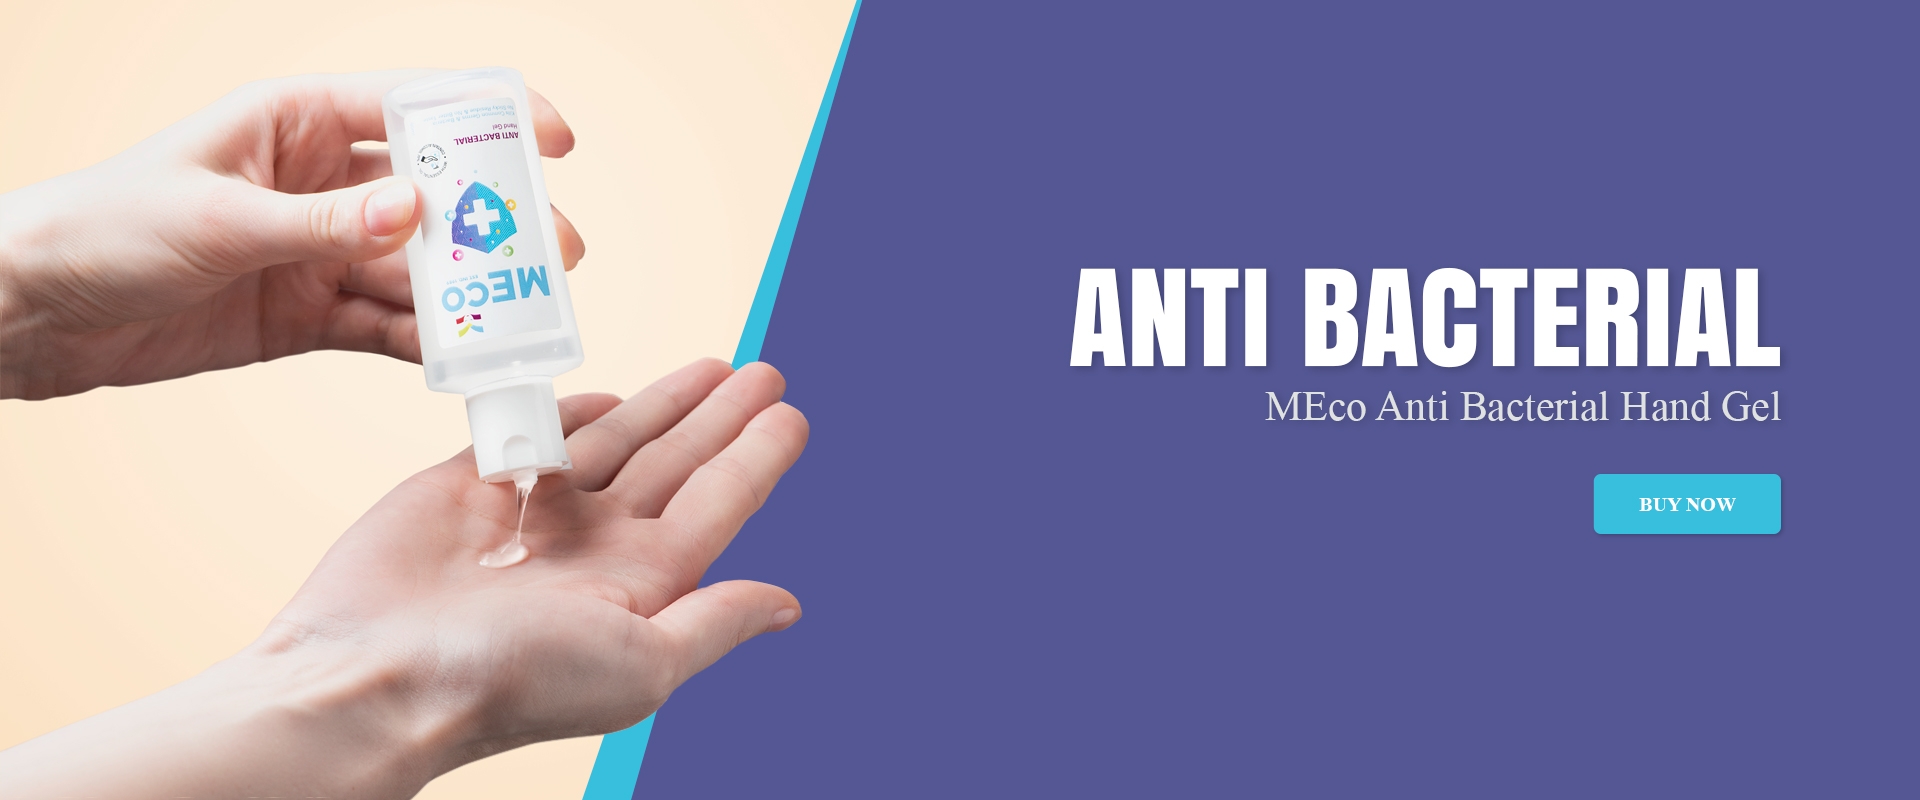 Meco Cosmetics - Anti Bacterial Hand Gel